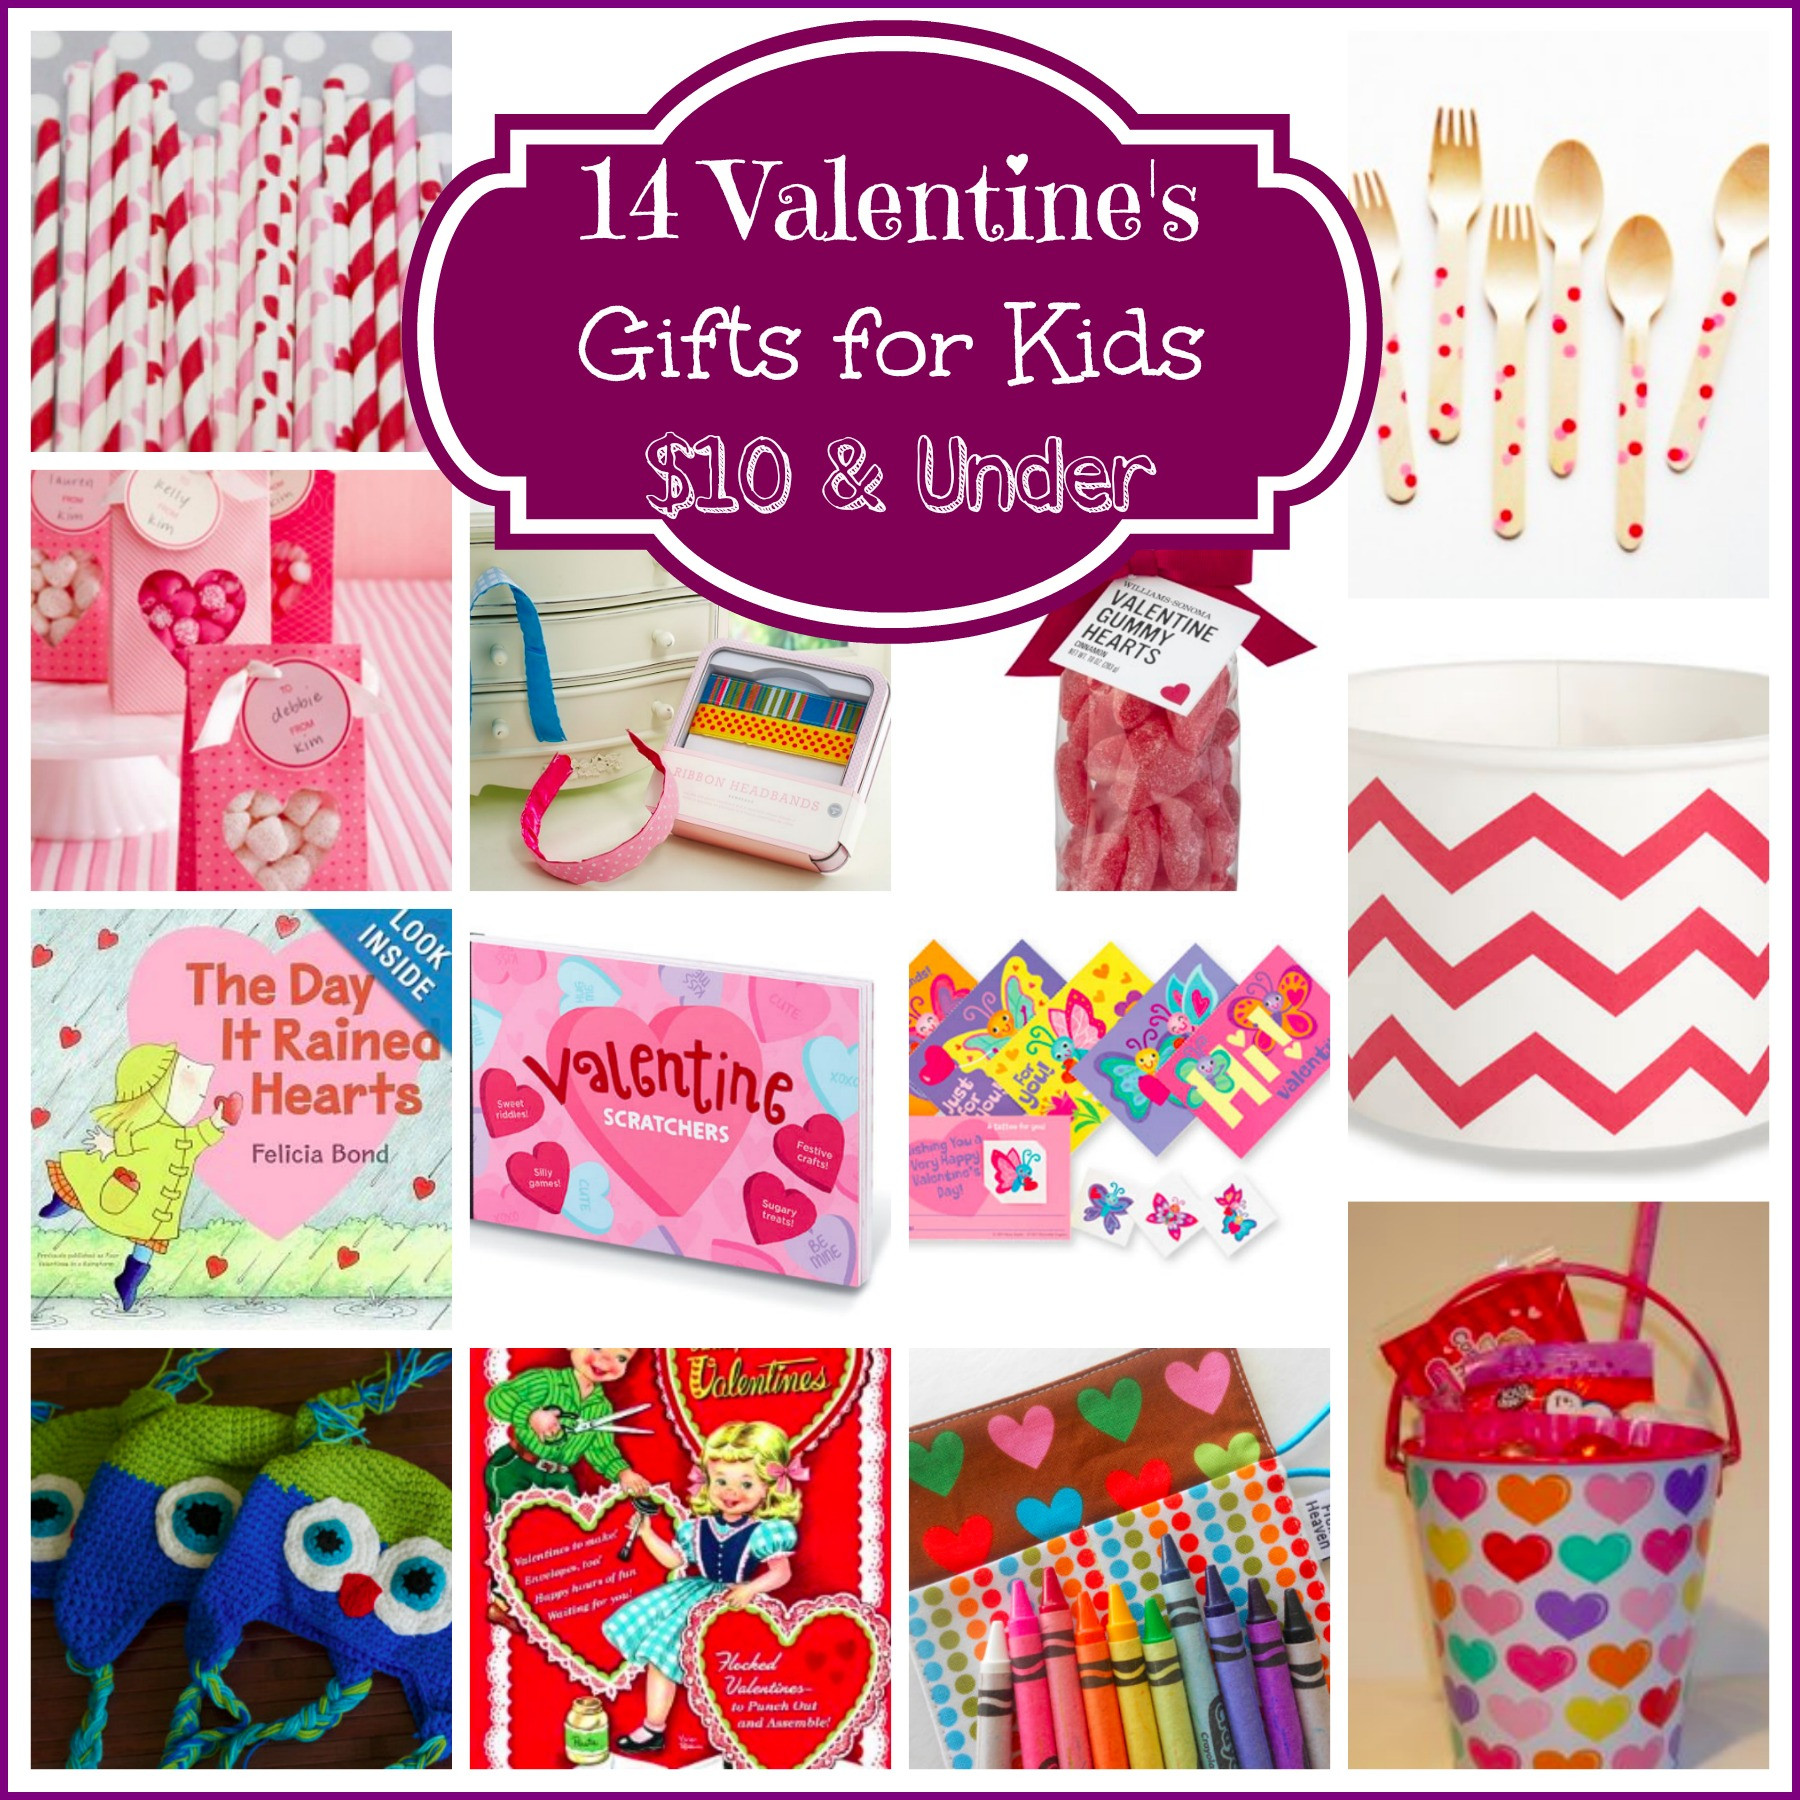 Valentine Day Gift Ideas For Kids
 14 Valentine’s Day Gifts for Kids $10 & Under